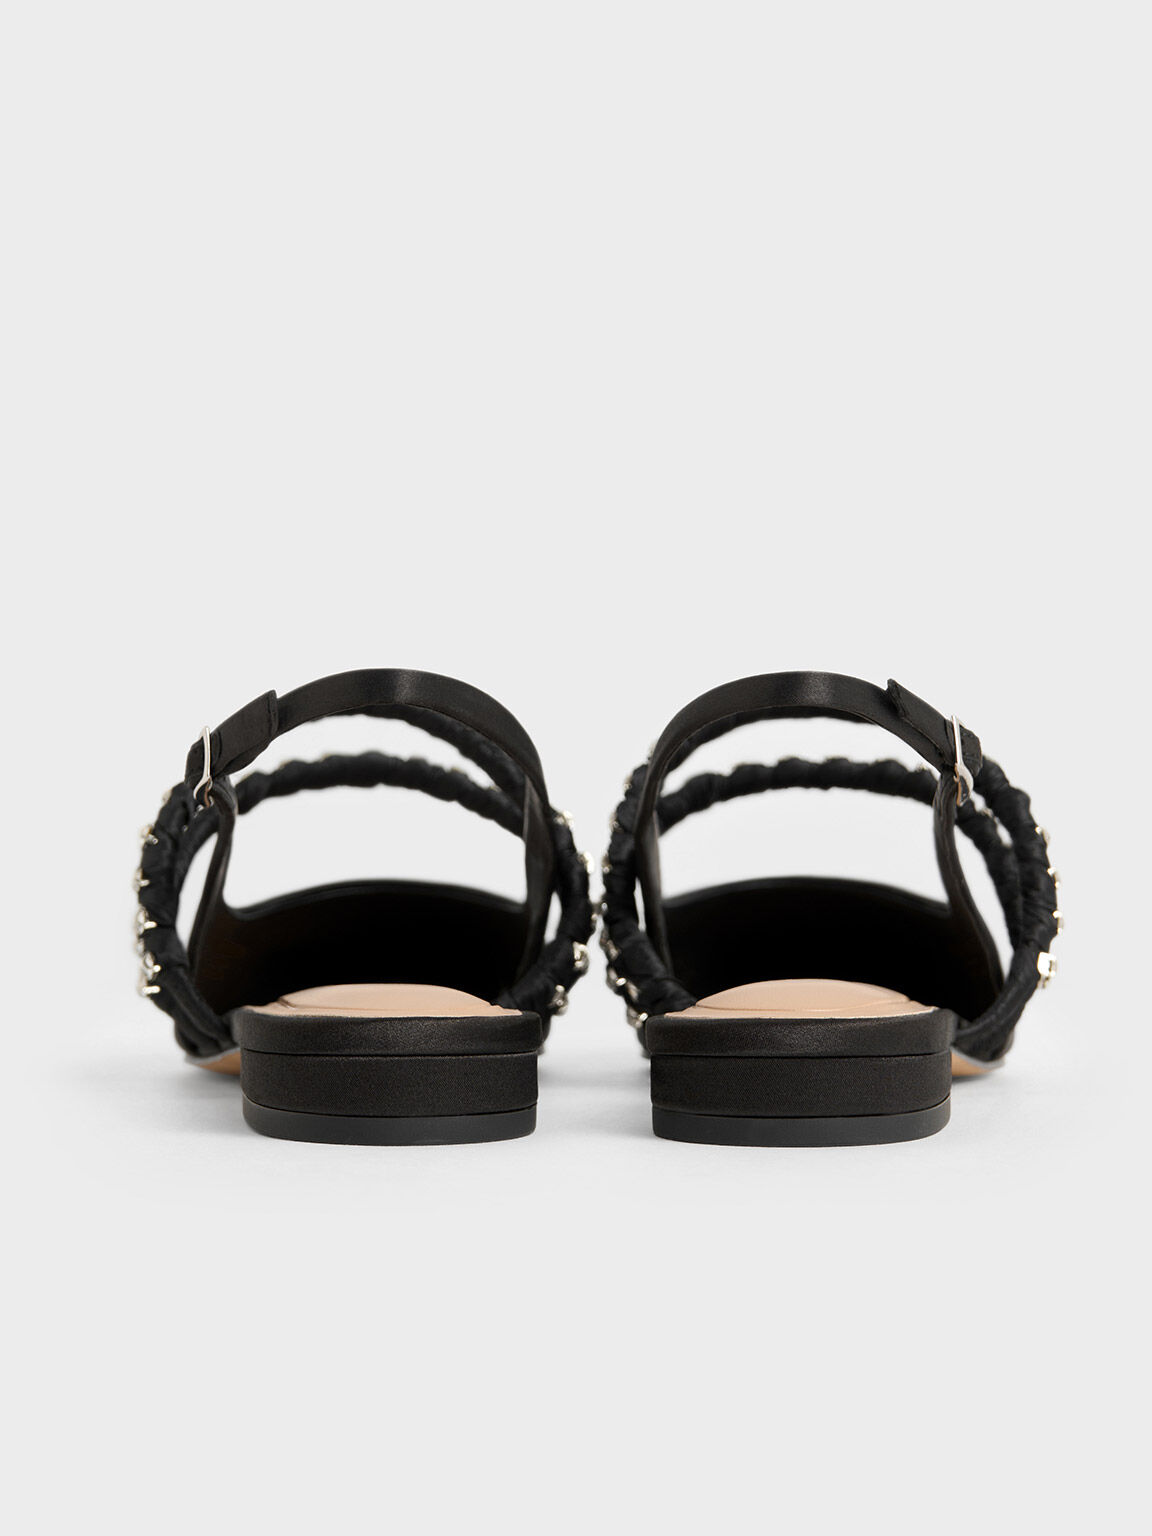 Sepatu Flats Mary Jane Gem-Encrusted Recycled Polyester Goldie, Black Textured, hi-res